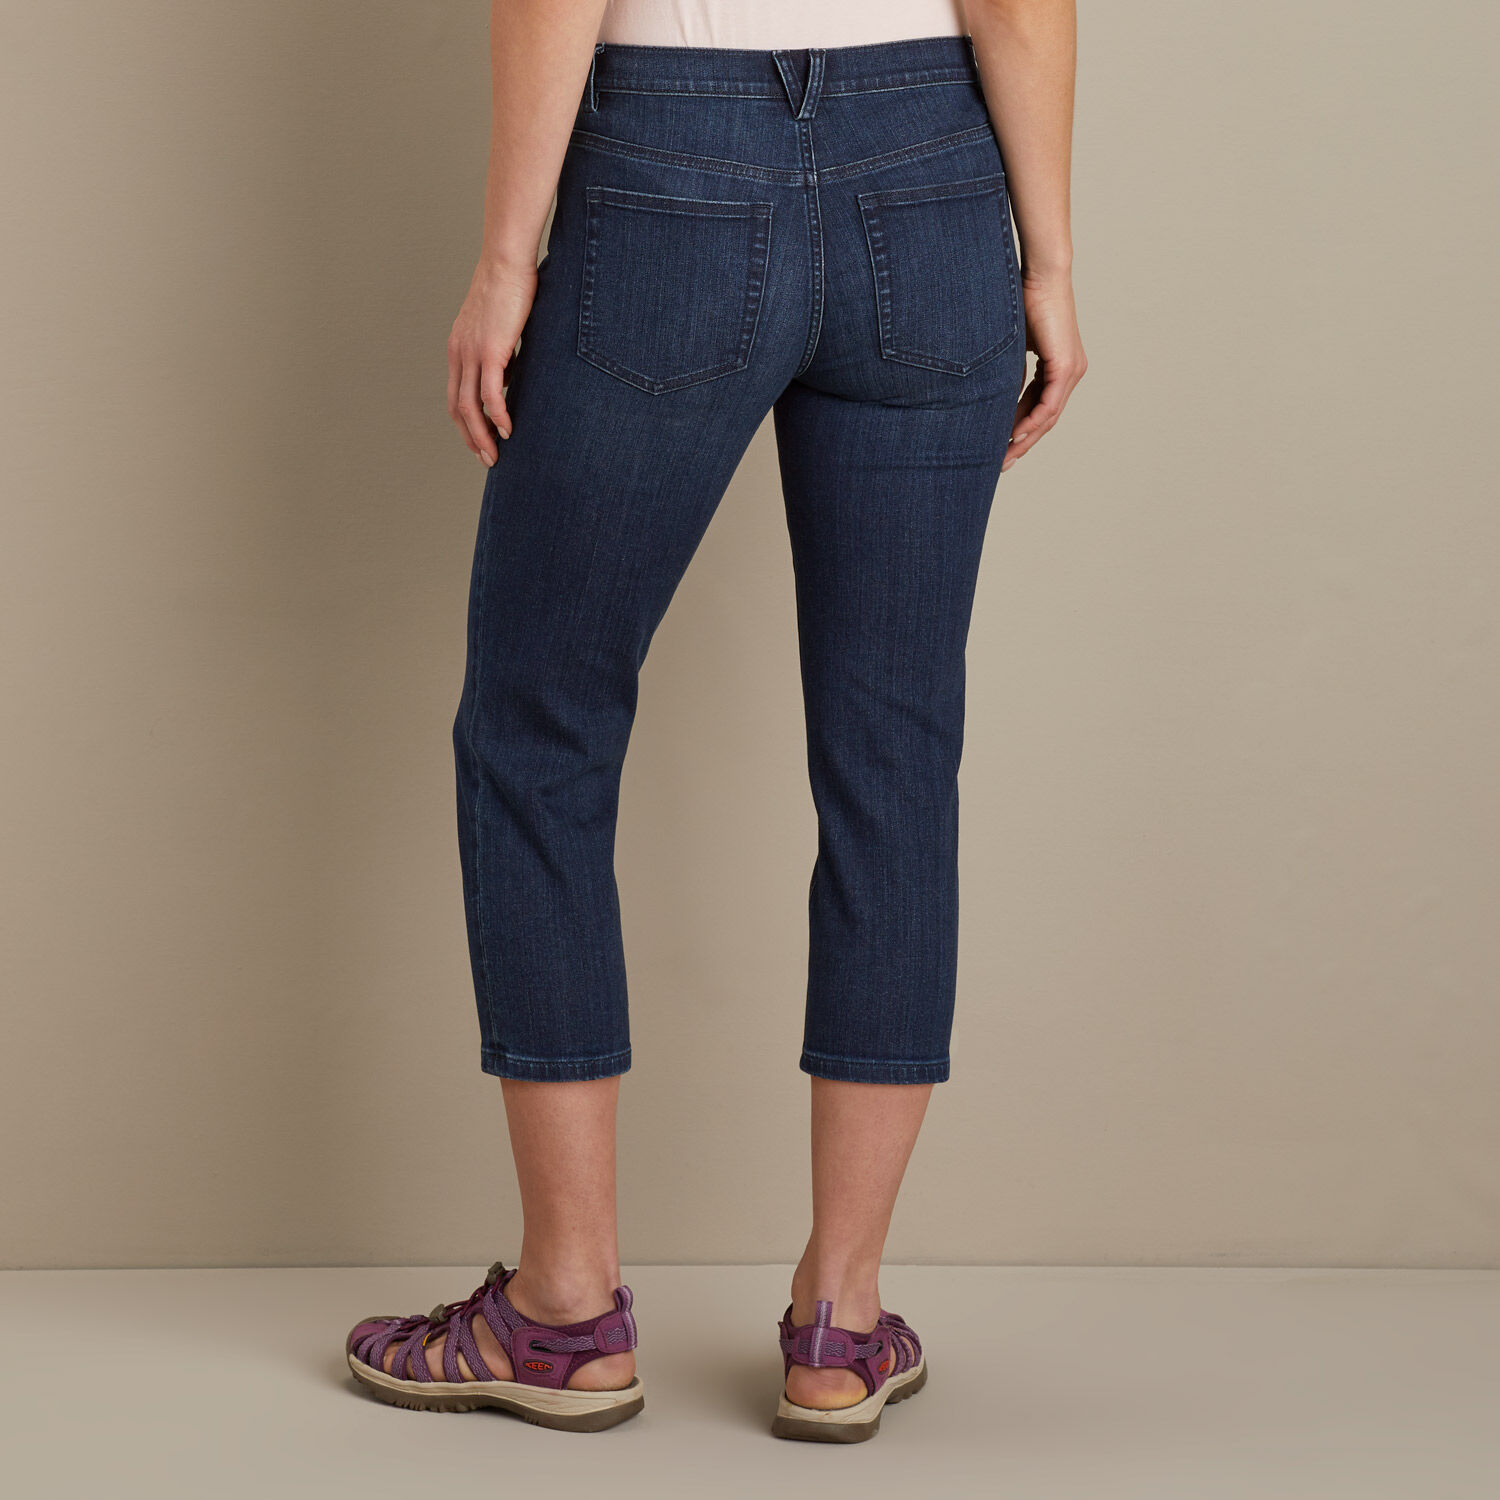 Levis 515 Capri Jeans Size 8 Womens Light Wash Mid Rise Blue Denim | eBay